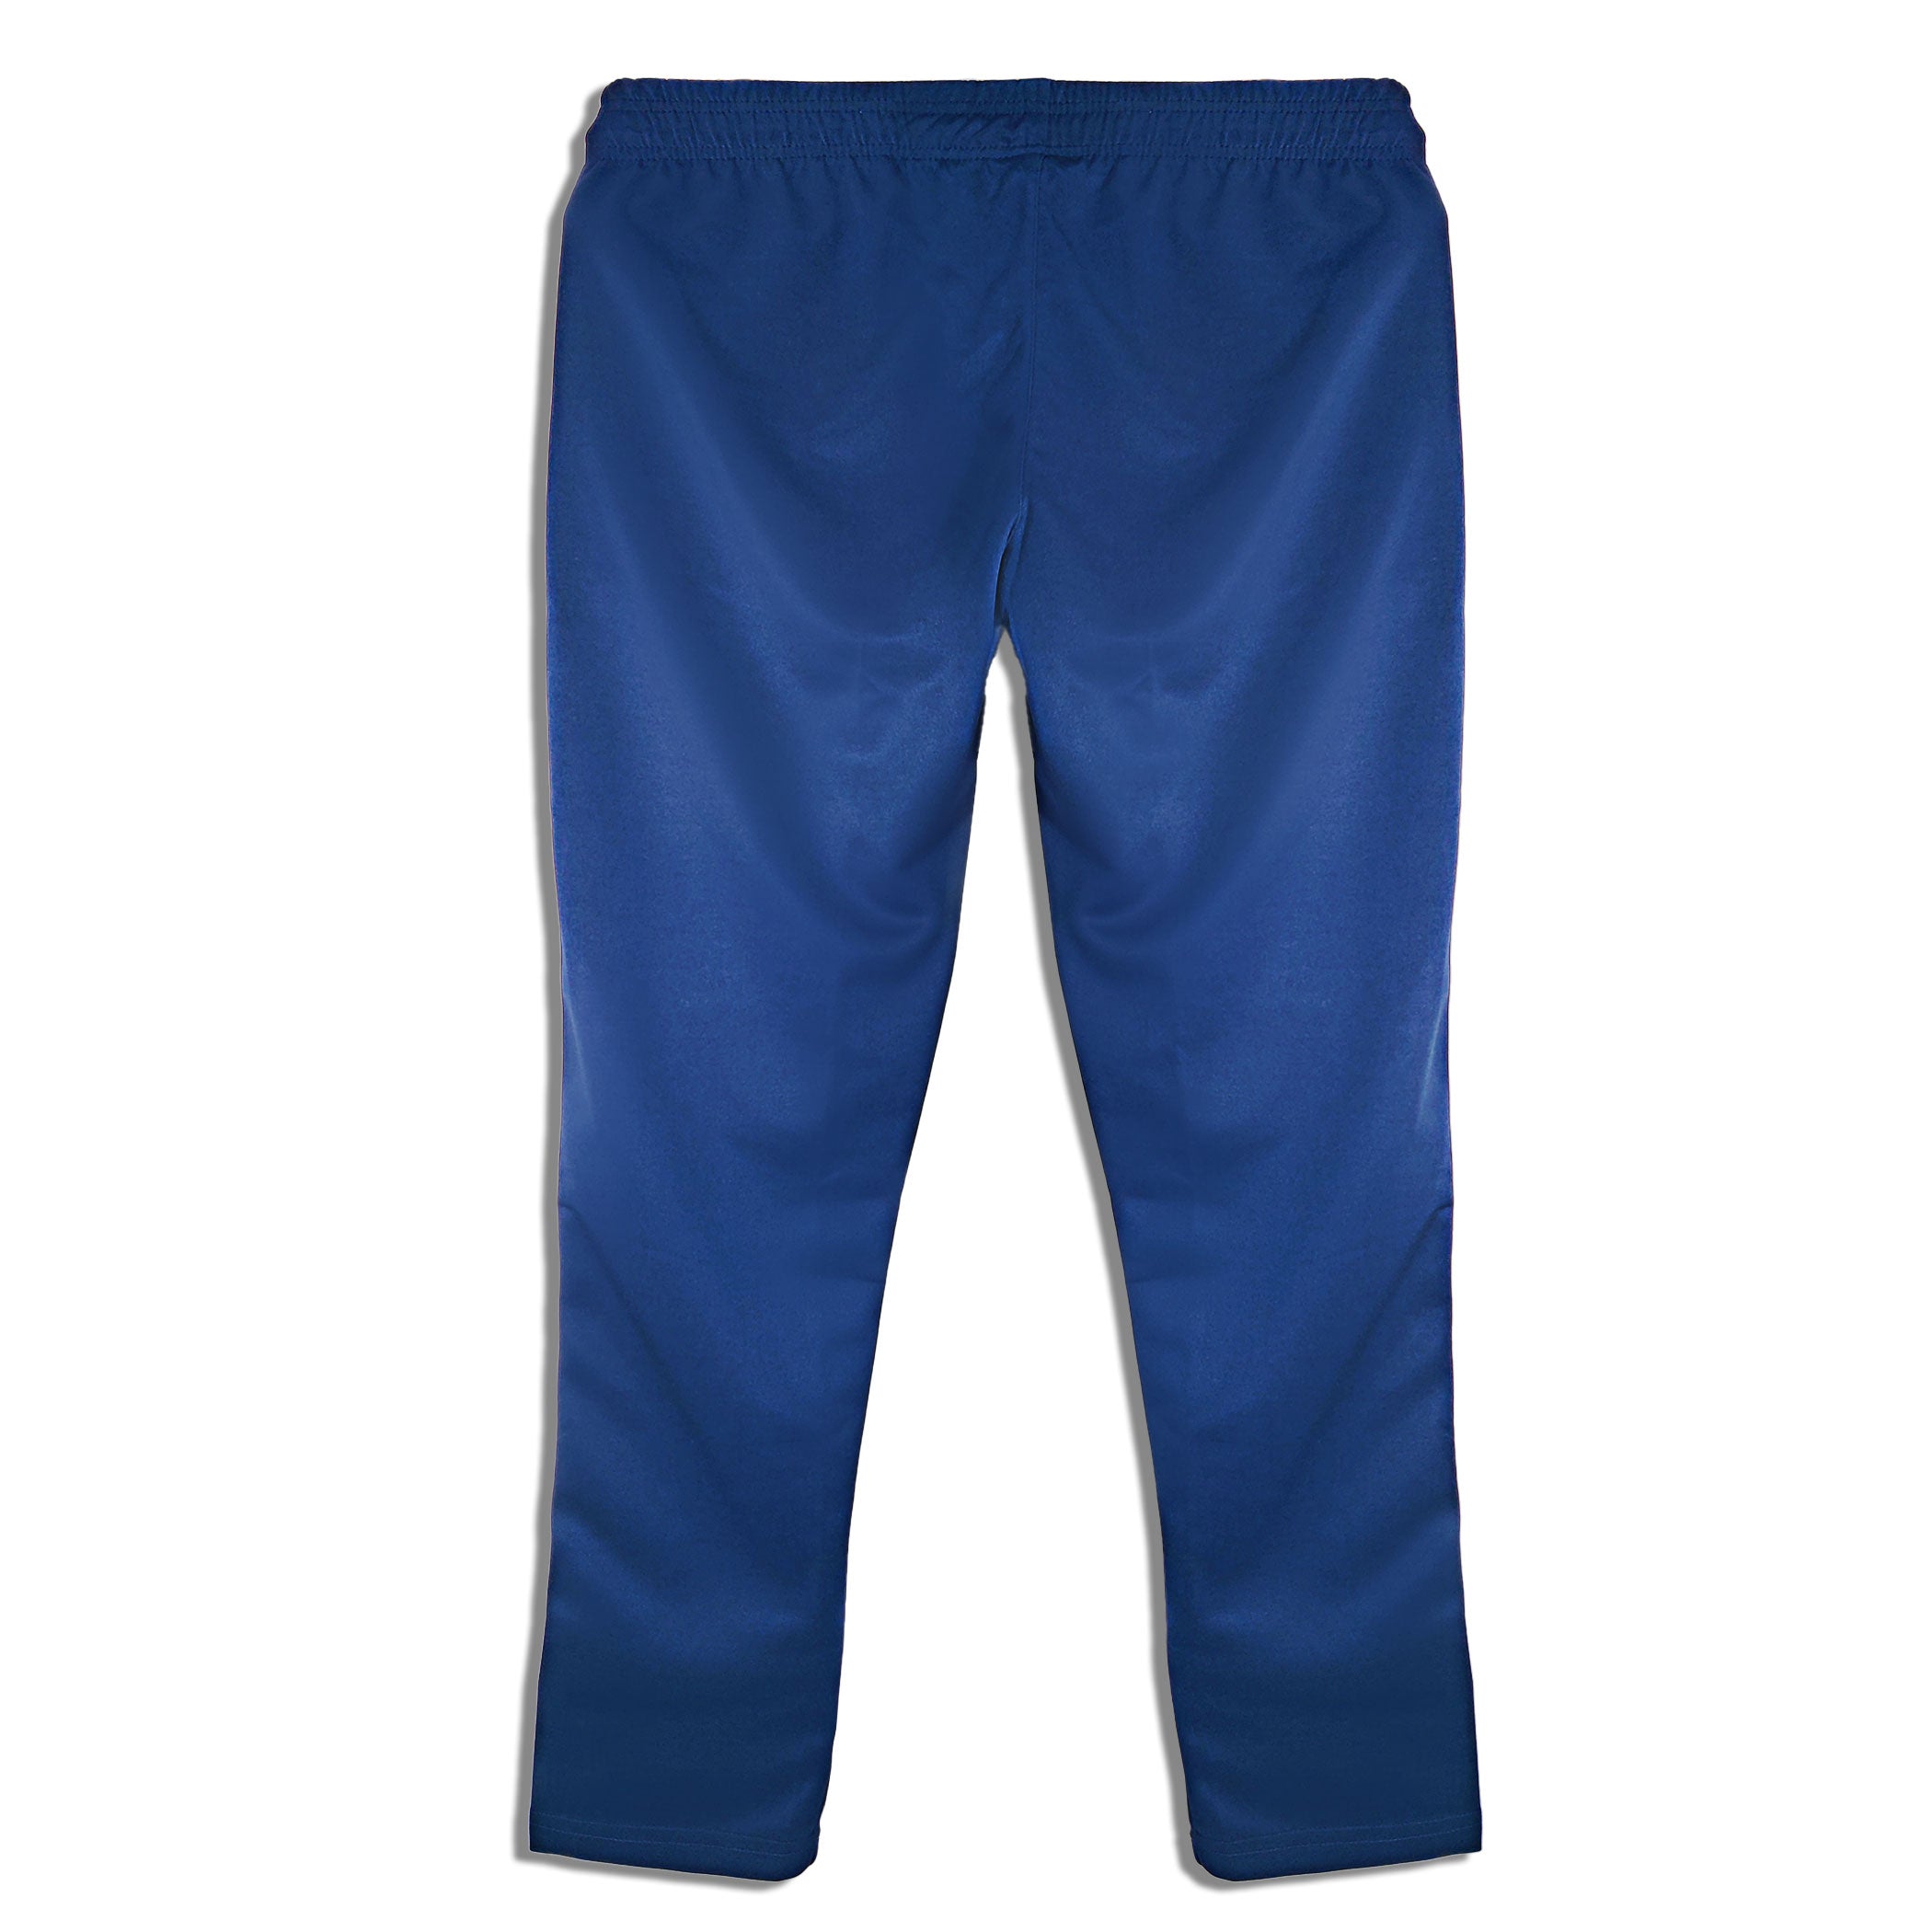 Premium Quality Trouser in Blue Color